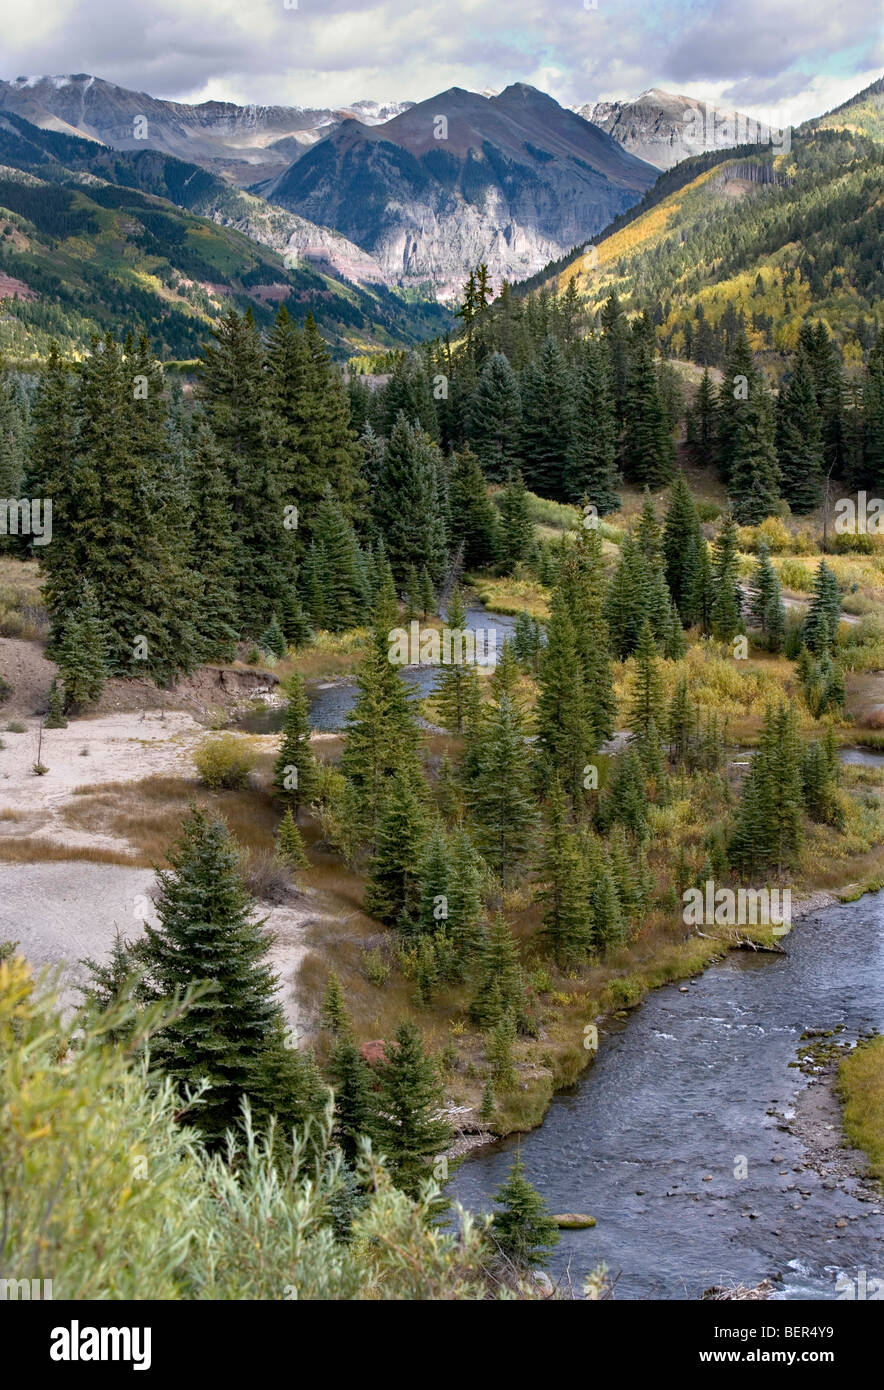 Mountains, pines, a stream, and Aspens near Telluride, Colorado. Stock Photo